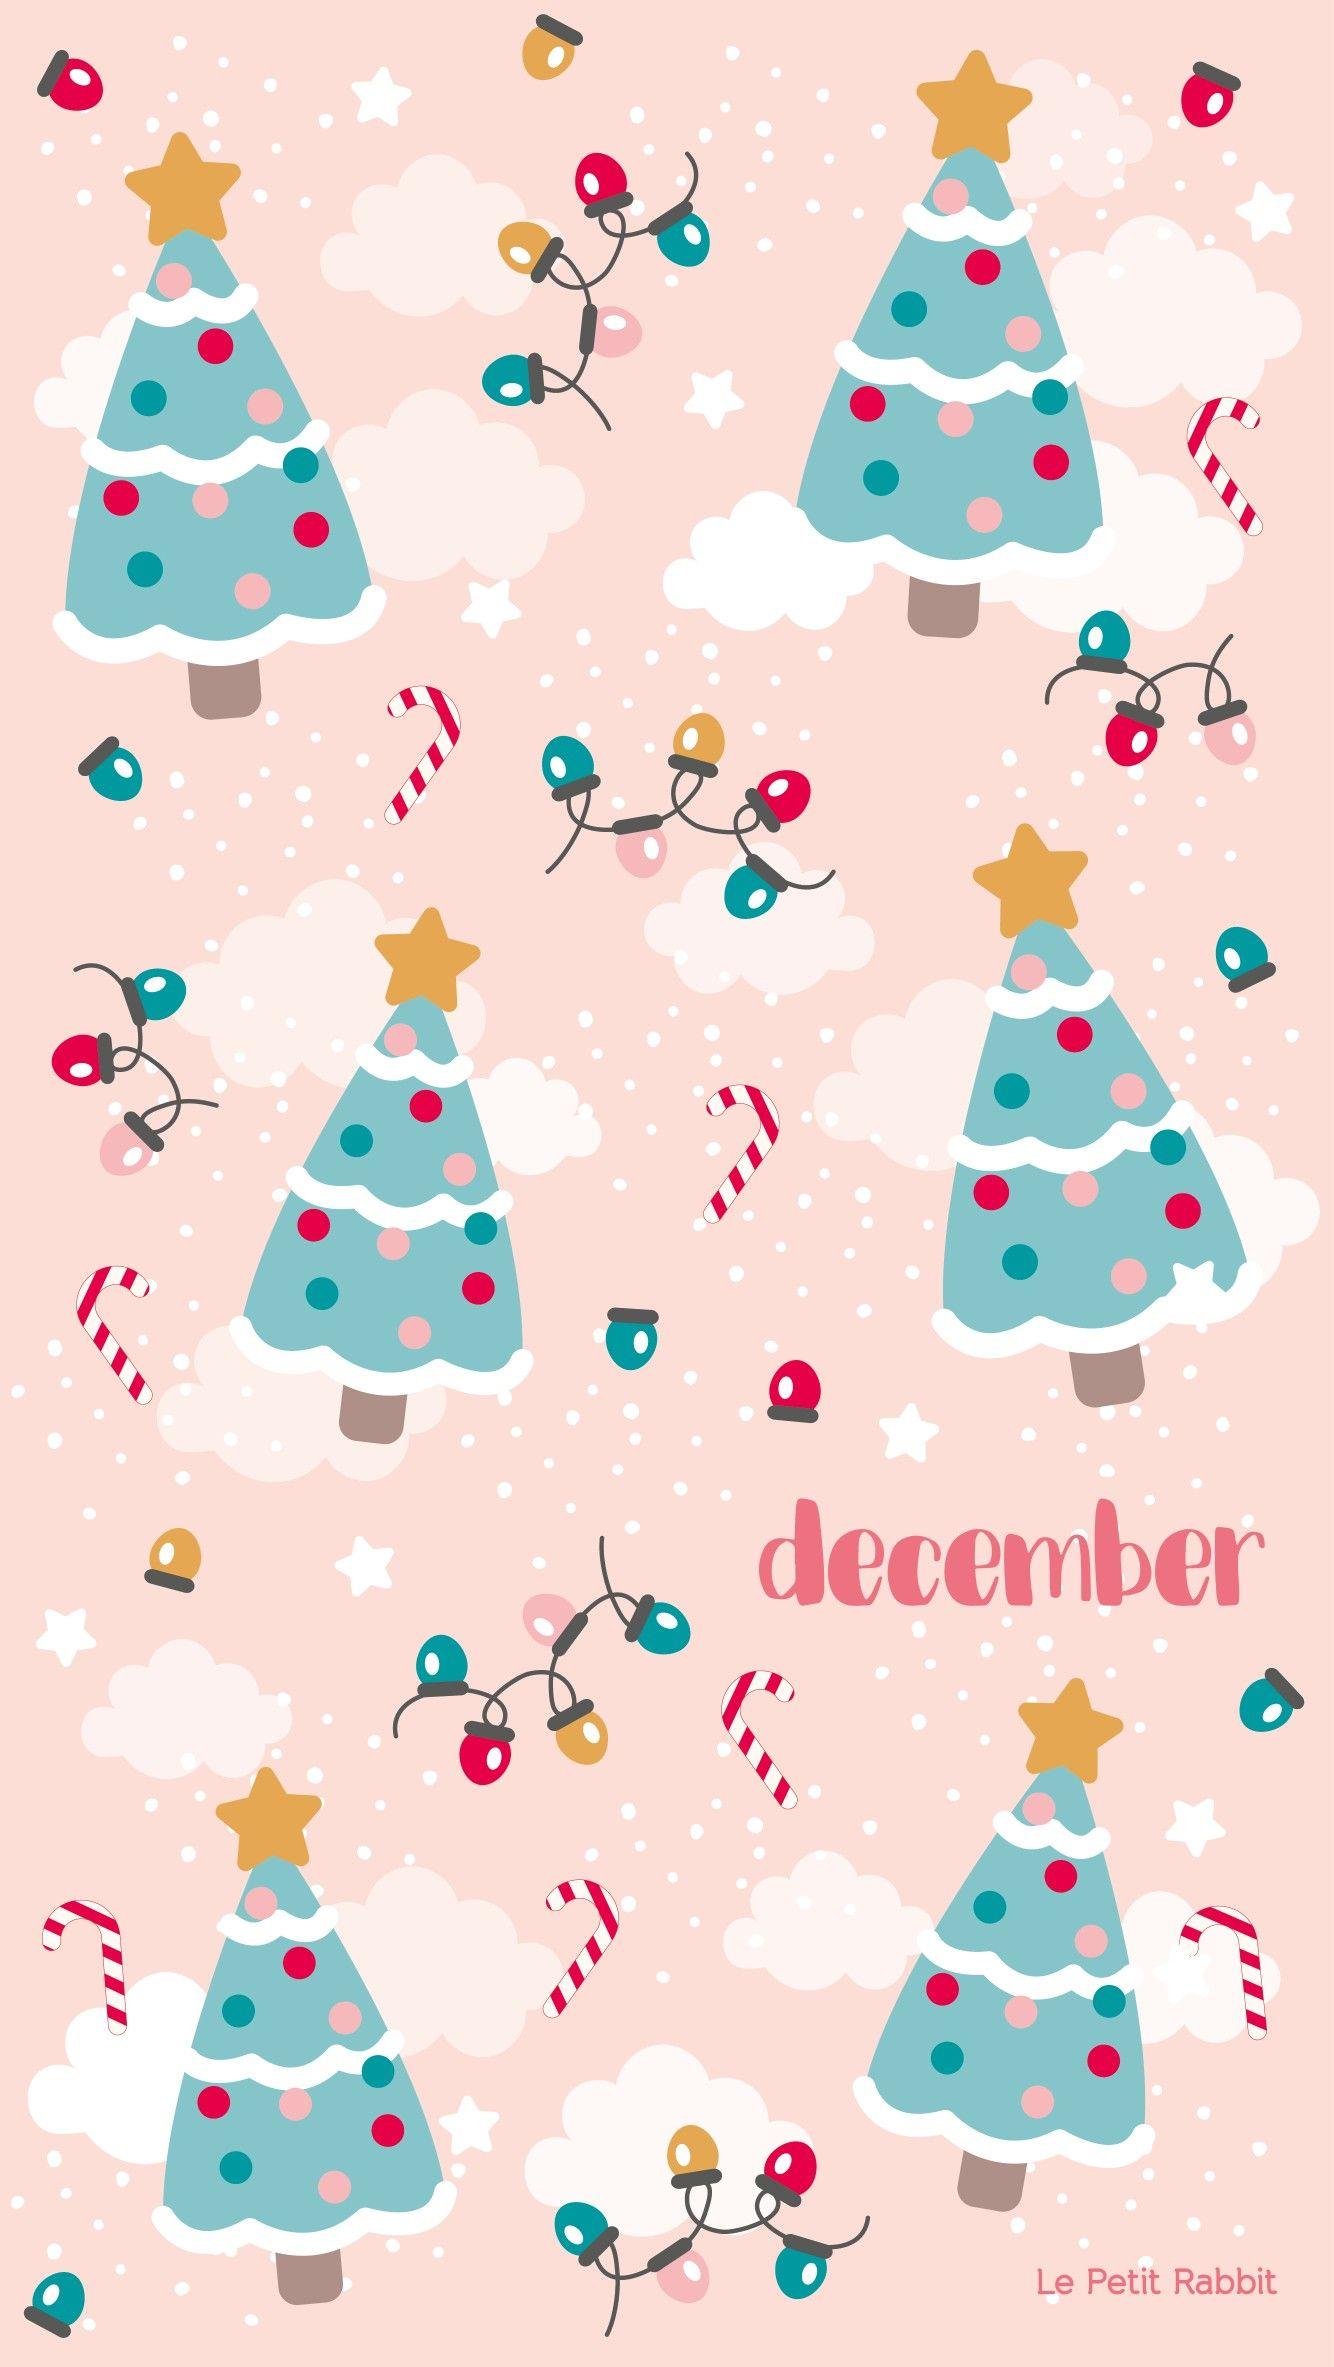 Wallpaper navidad. Wallpaper iphone christmas, Cute christmas wallpaper, December wallpaper iphone